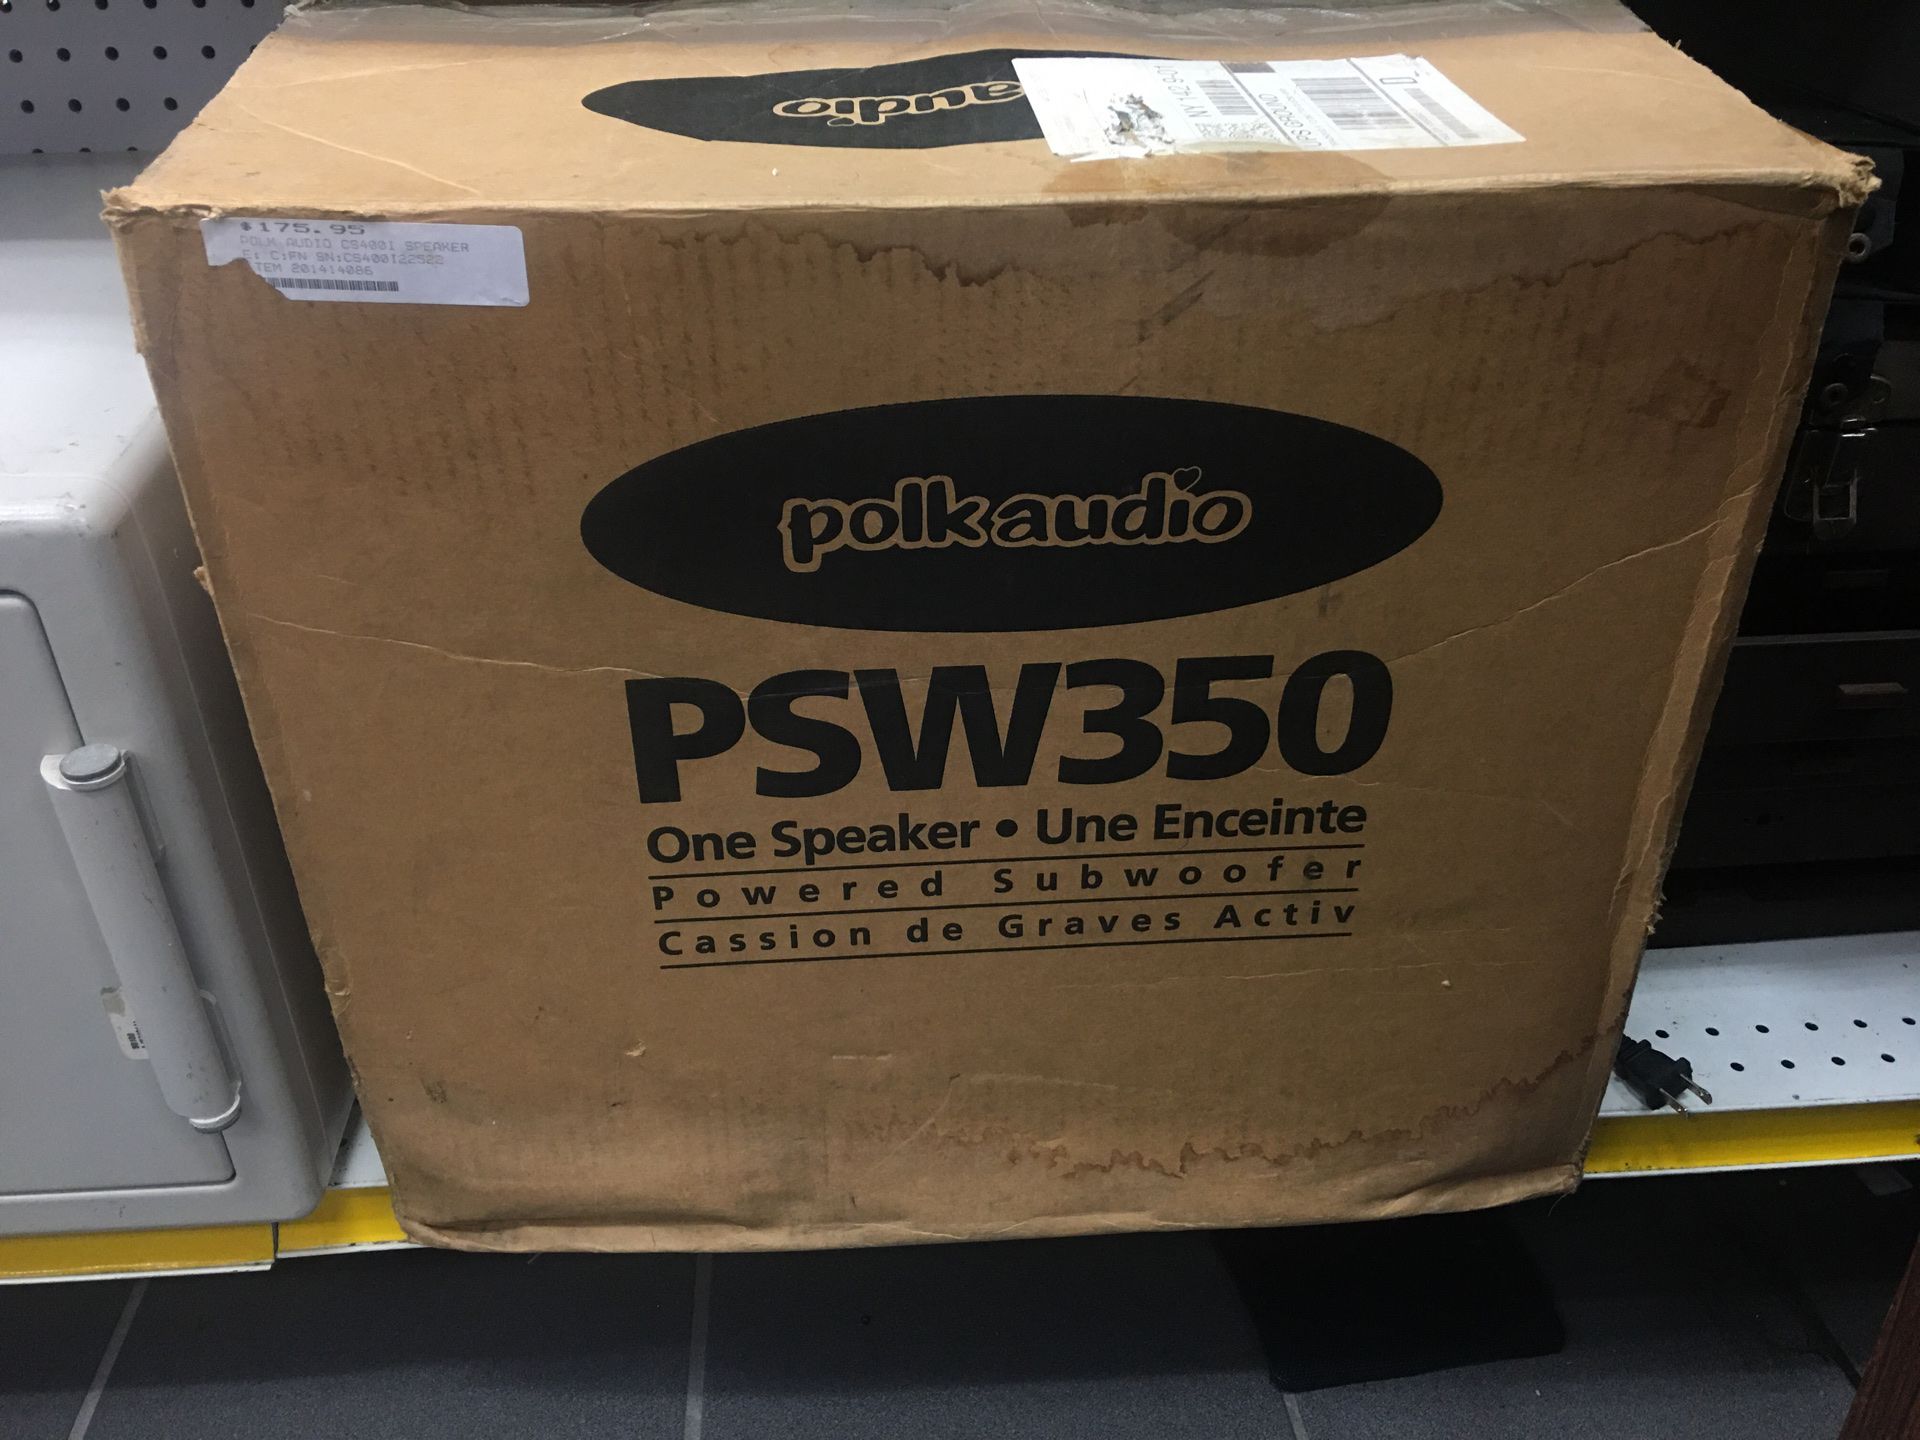 Polk audio PSW350 100W 10” long throw powered subwoofer speaker audiophile